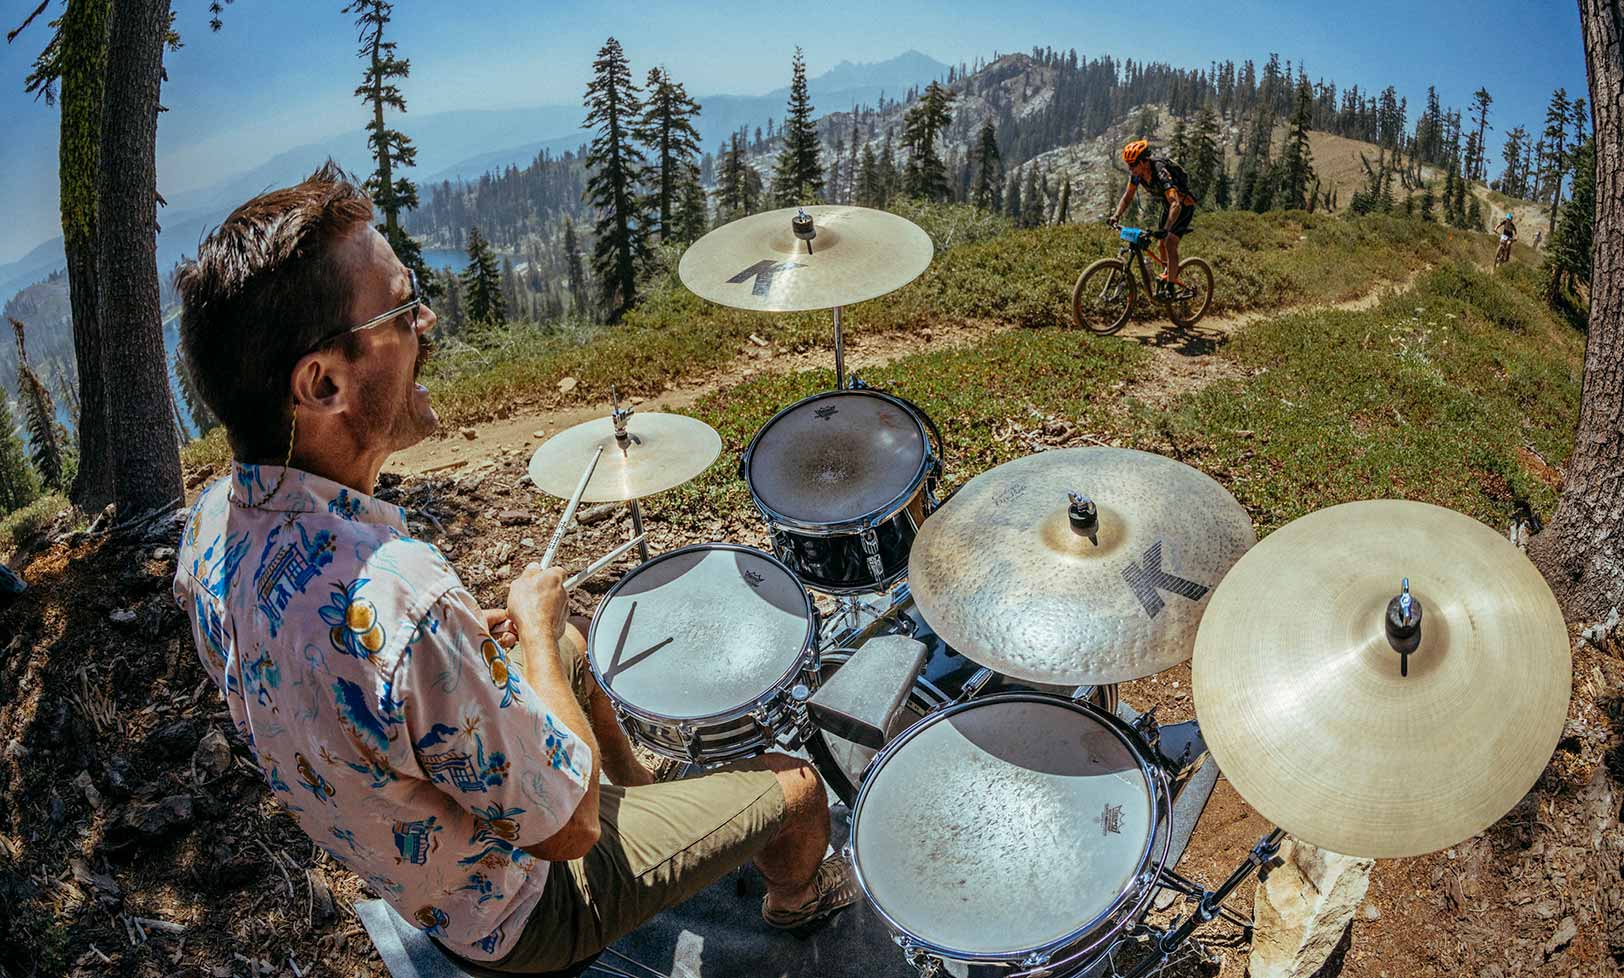 Drummer cheering on the racers on the Sierra Summit